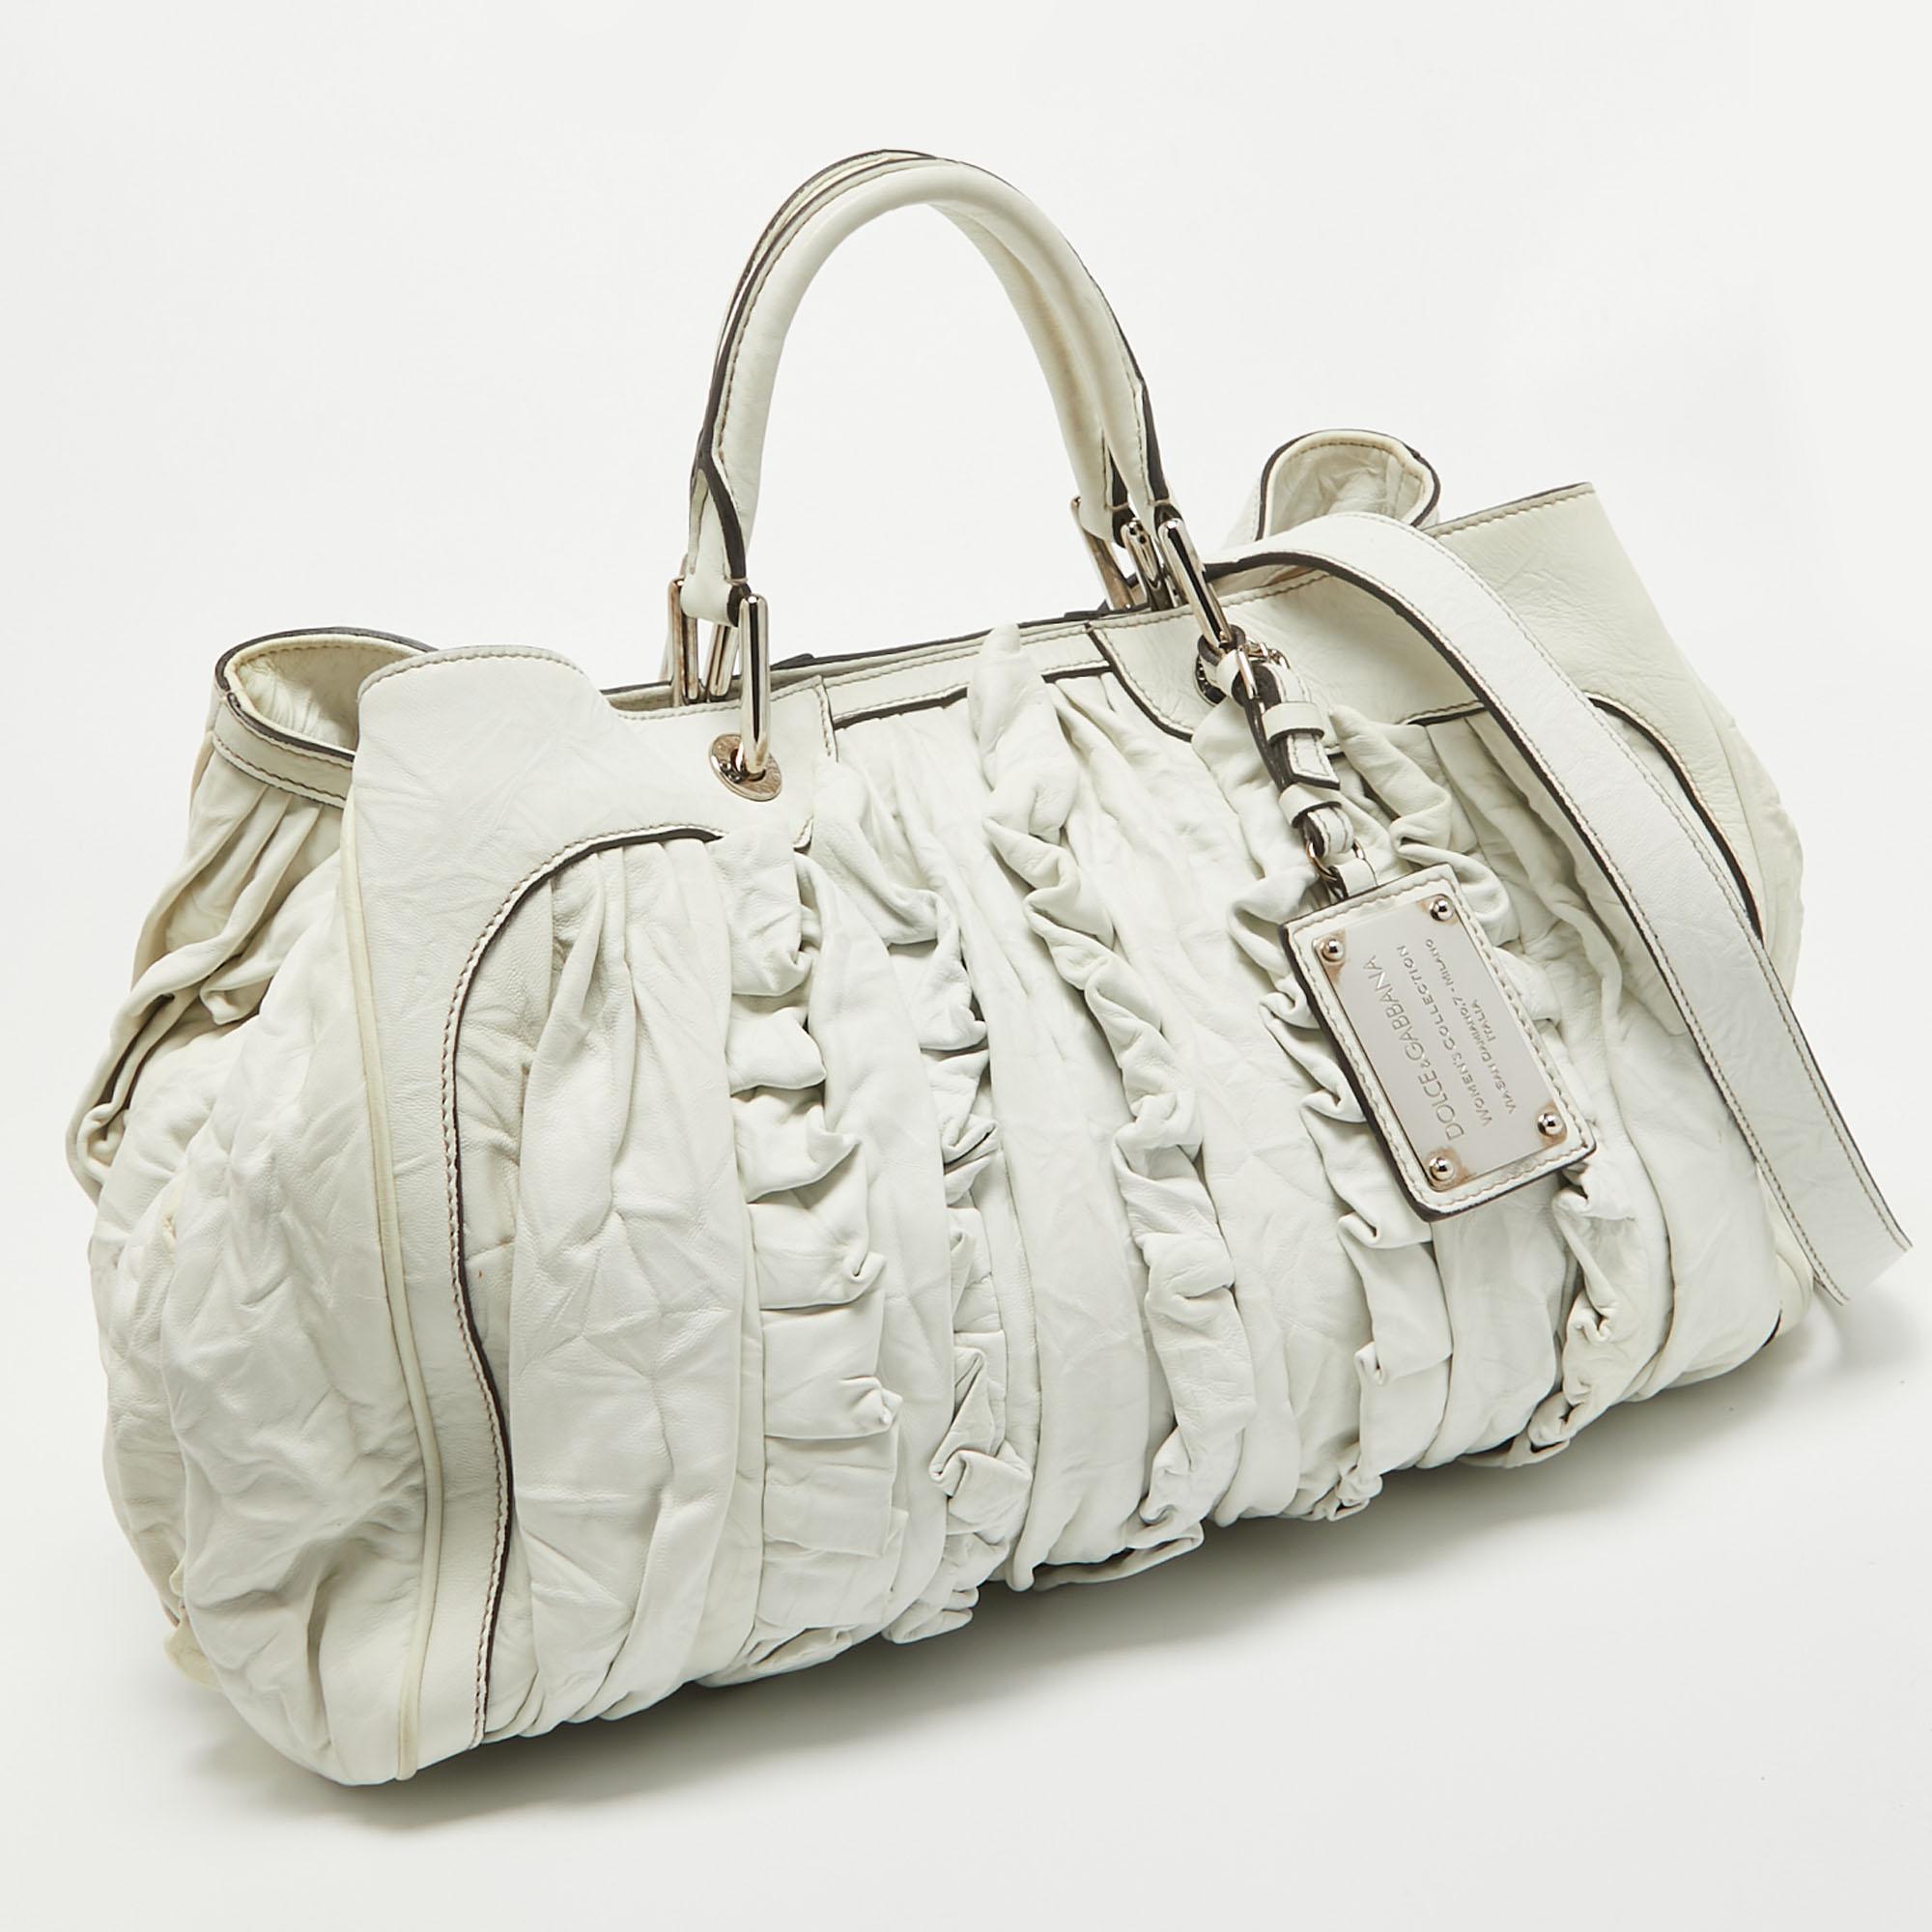 Dolce & Gabbana White Leather Ruffle Miss Brooke Satchel In Good Condition For Sale In Dubai, Al Qouz 2